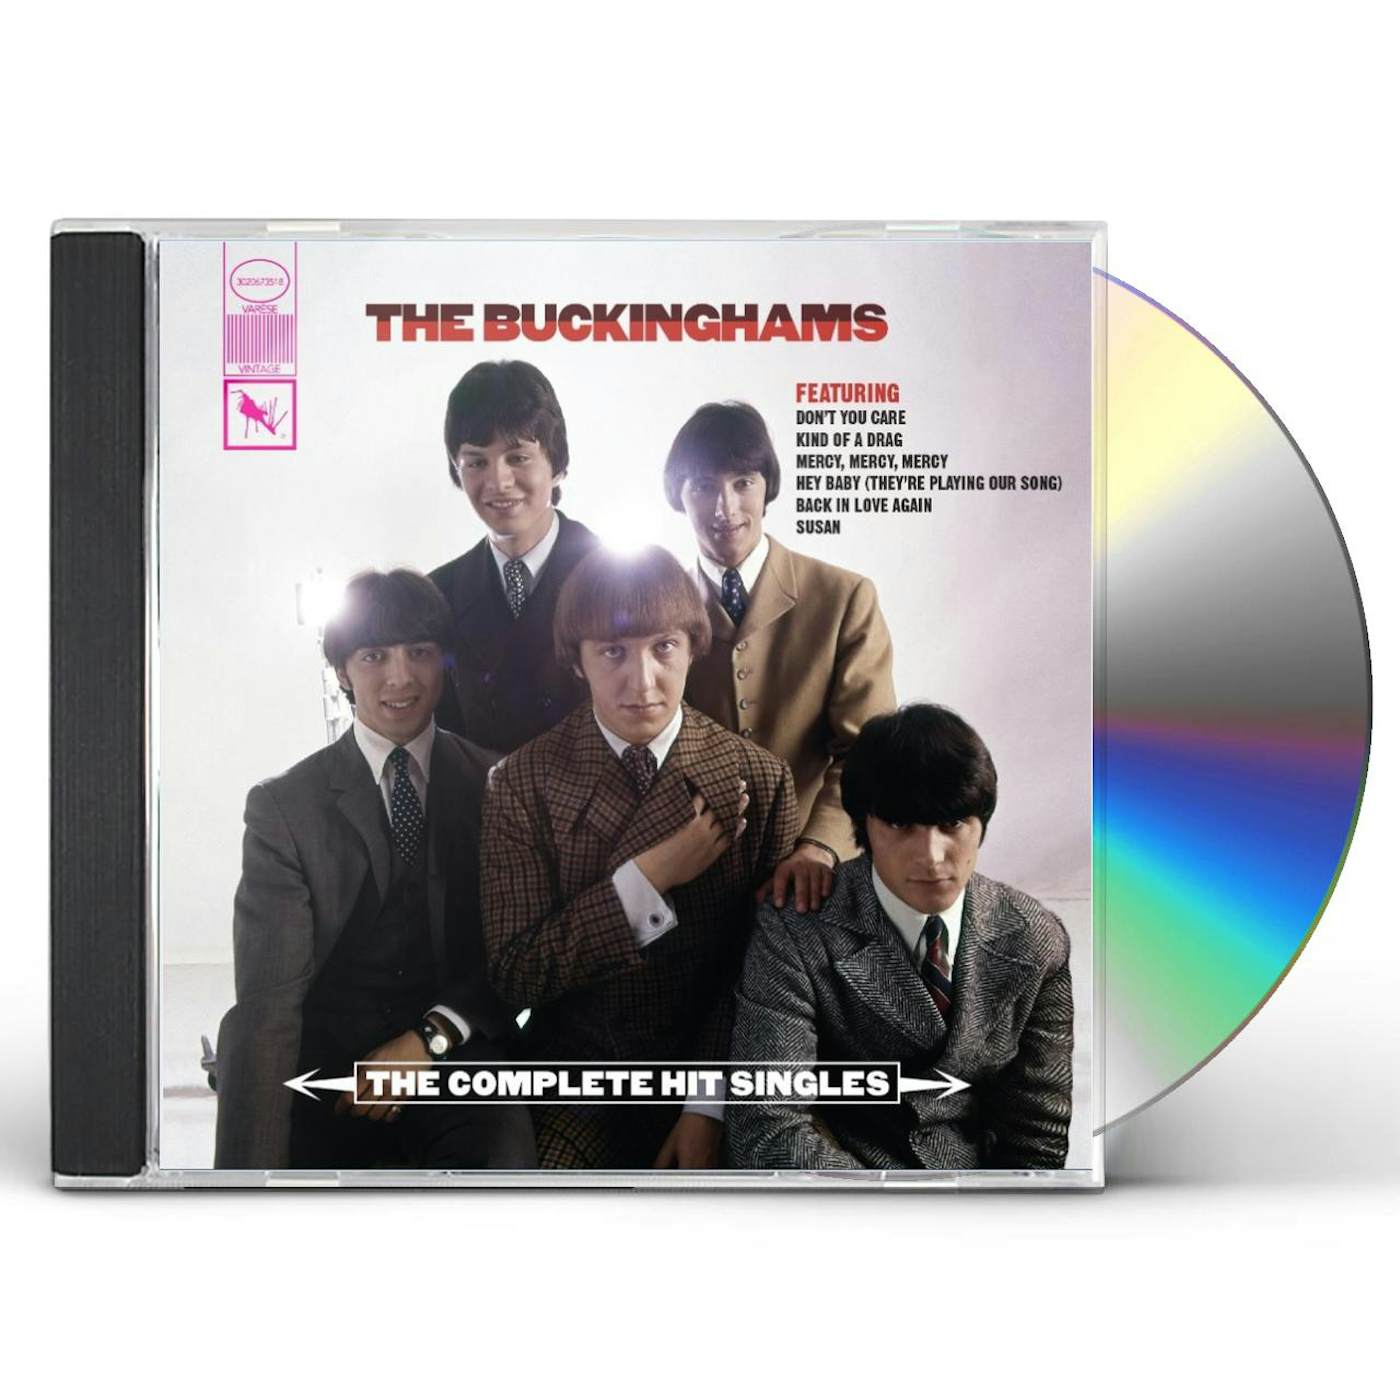 The Buckinghams: THE COMPLETE HIT SINGLES CD